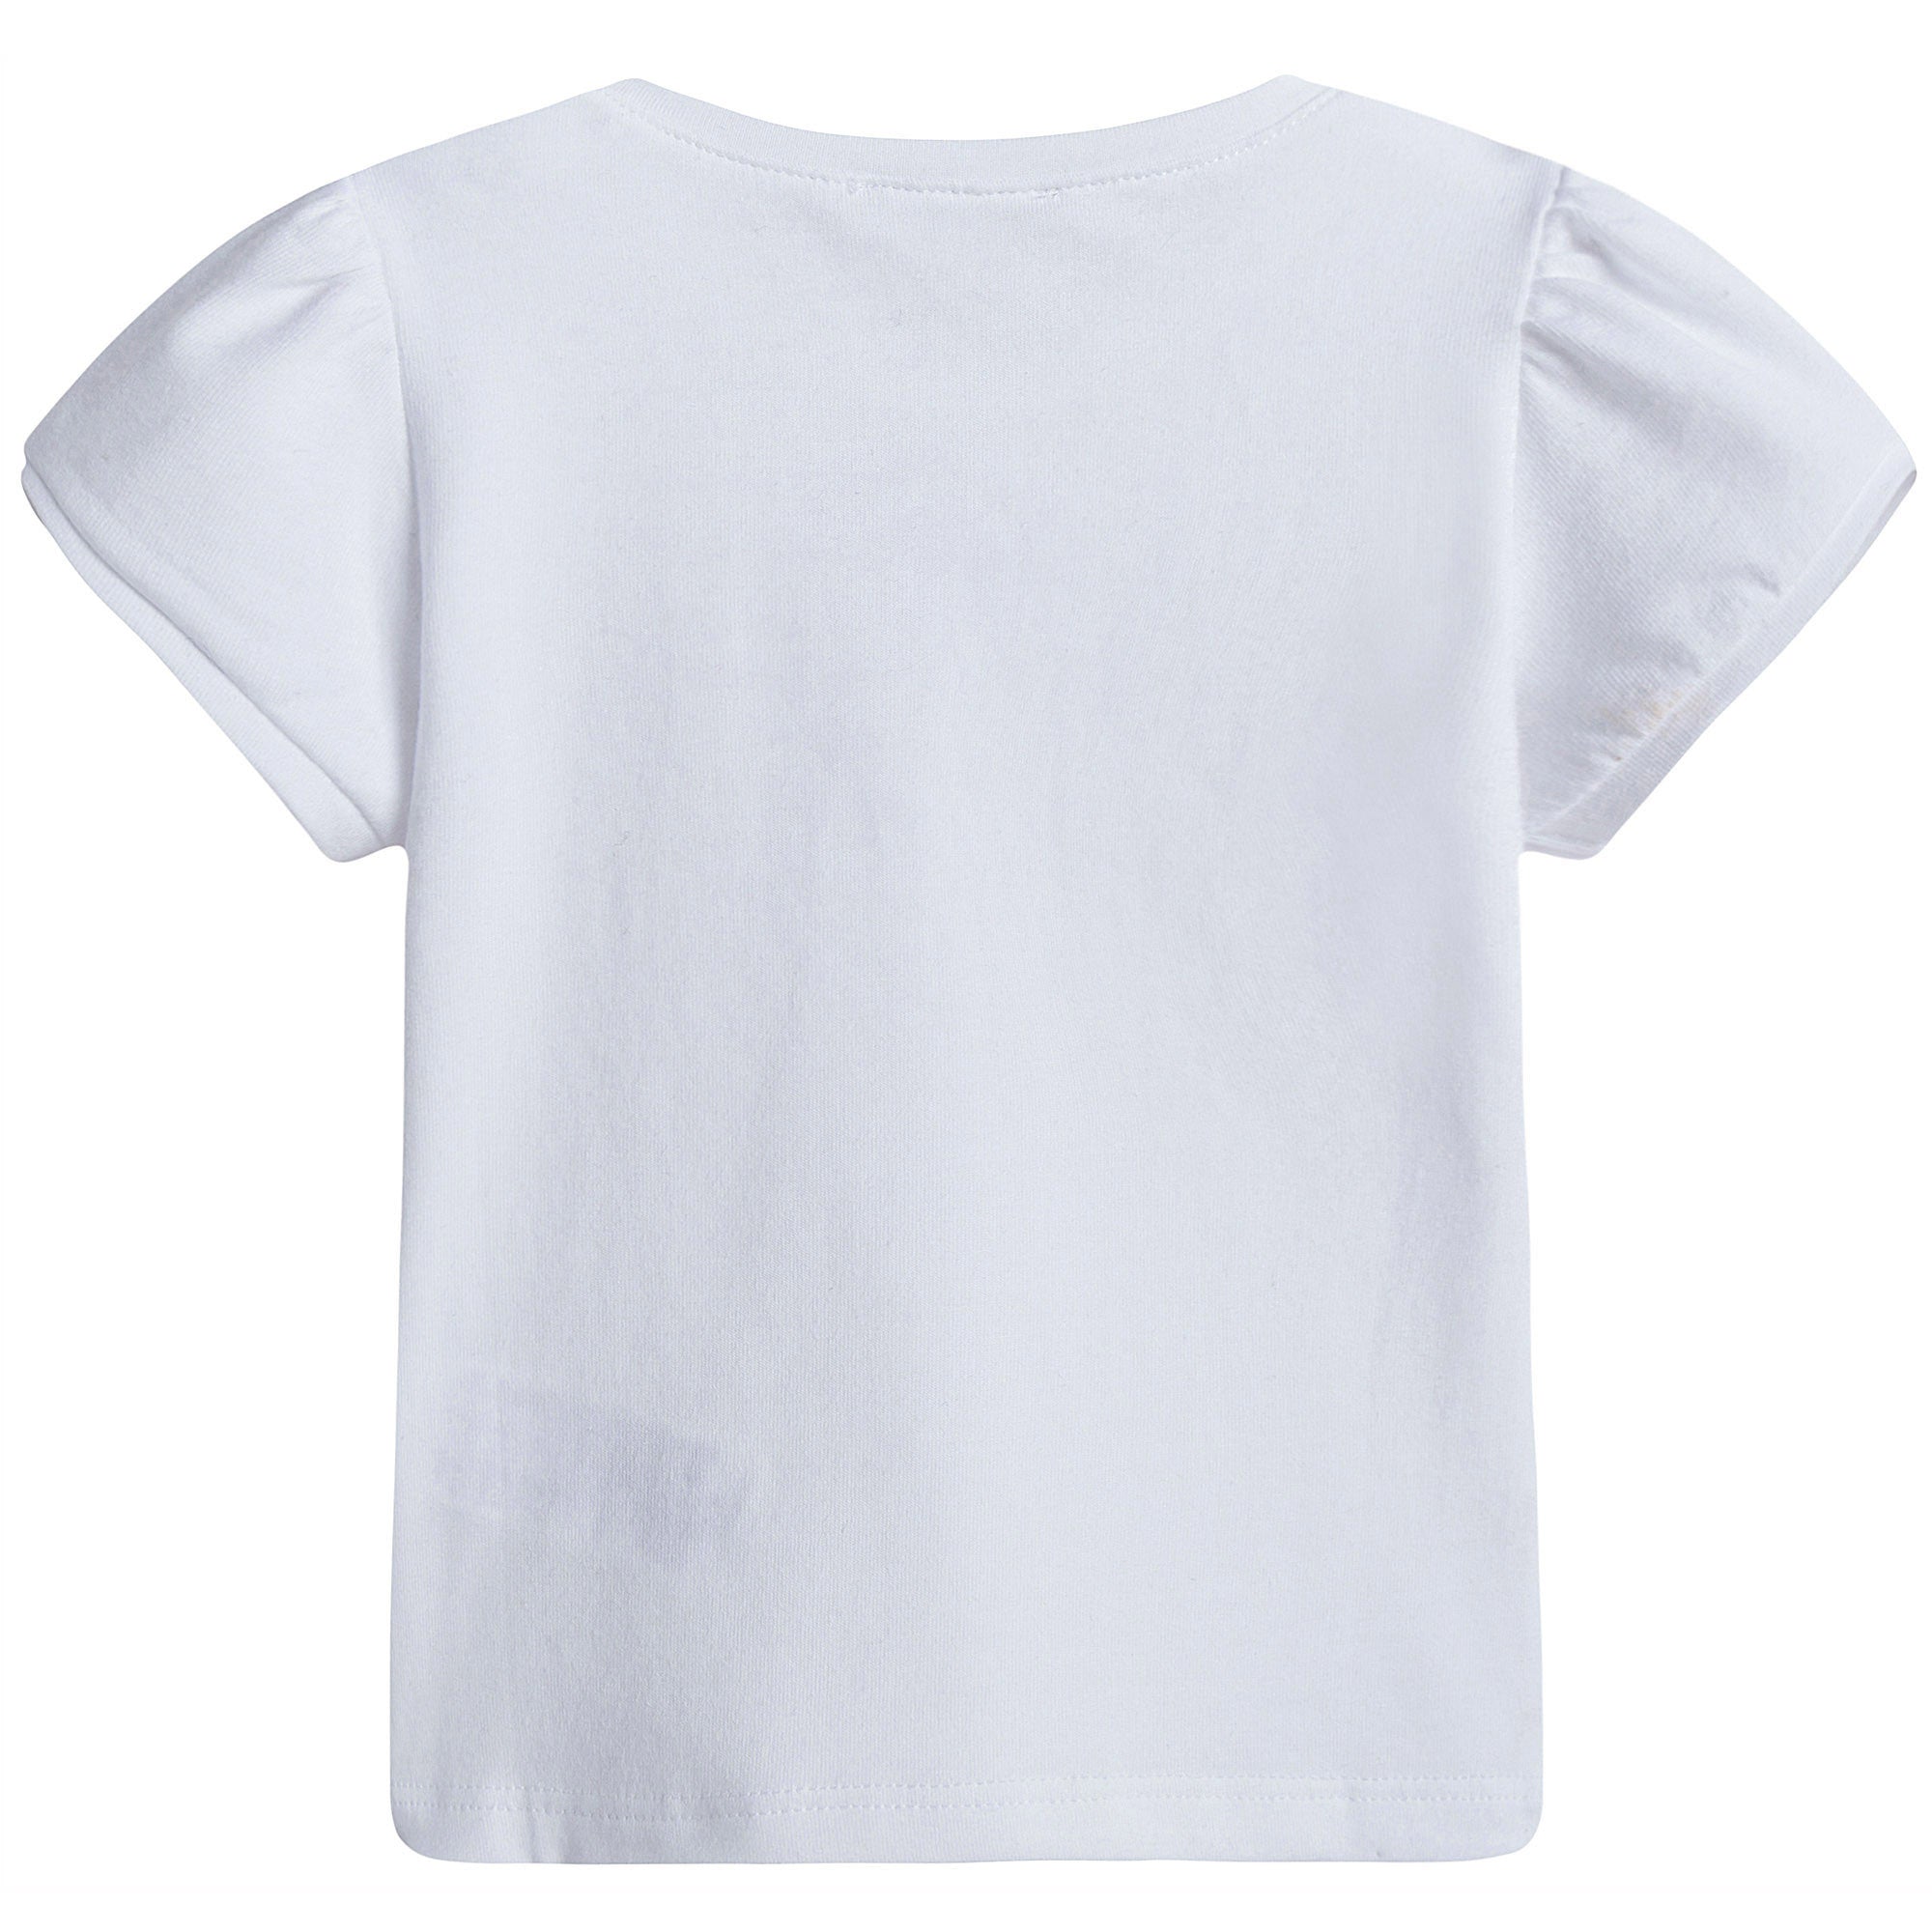 Baby Girls White Cotton Jersey T-Shirt - CÉMAROSE | Children's Fashion Store - 2